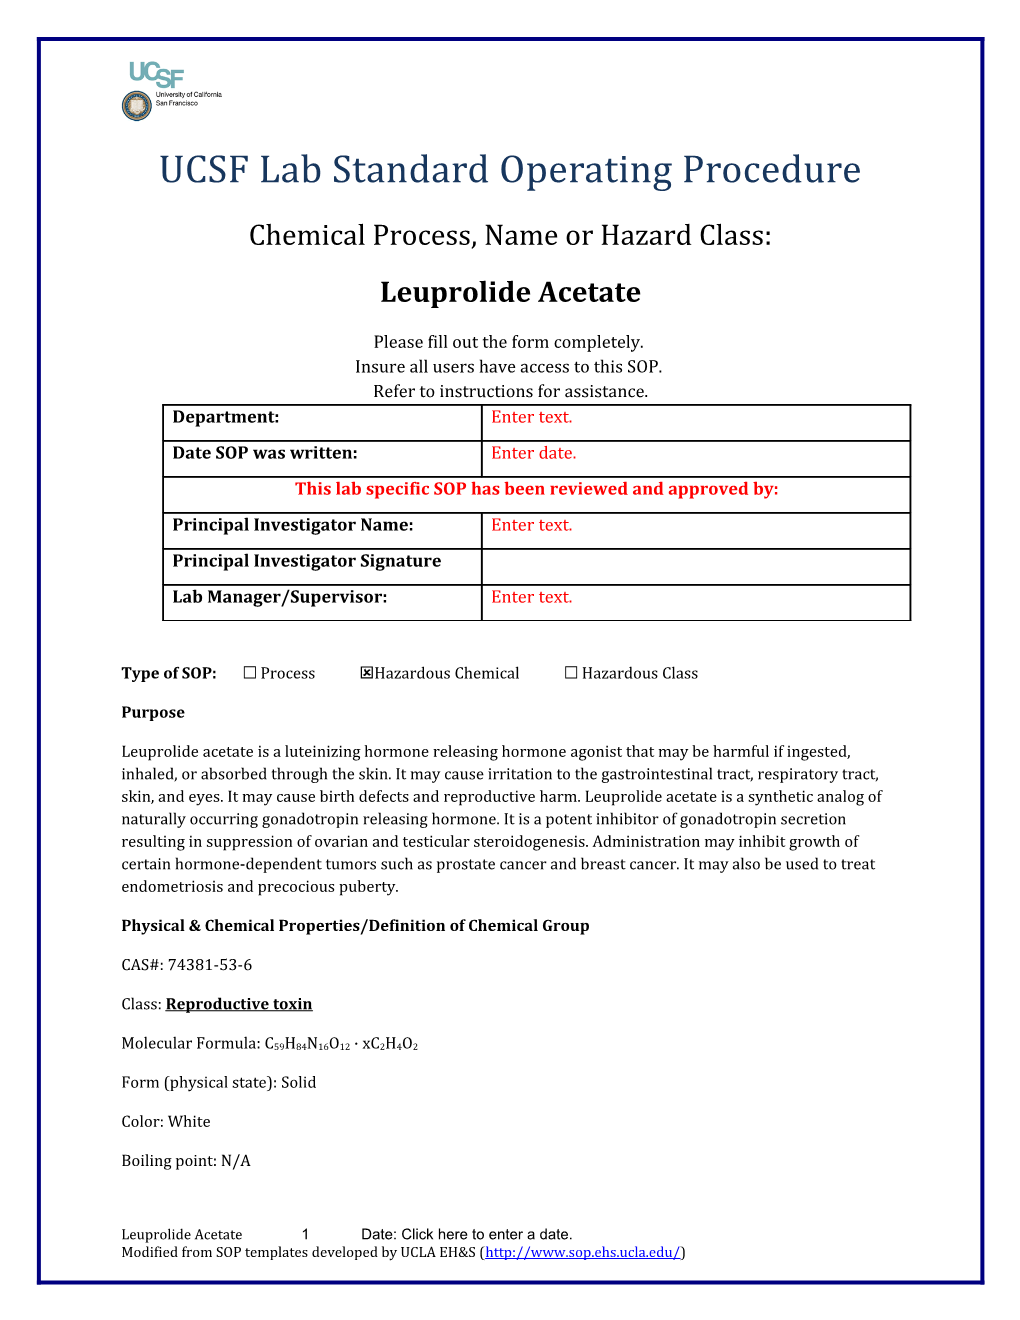 UCSF Lab Standard Operating Procedure s4